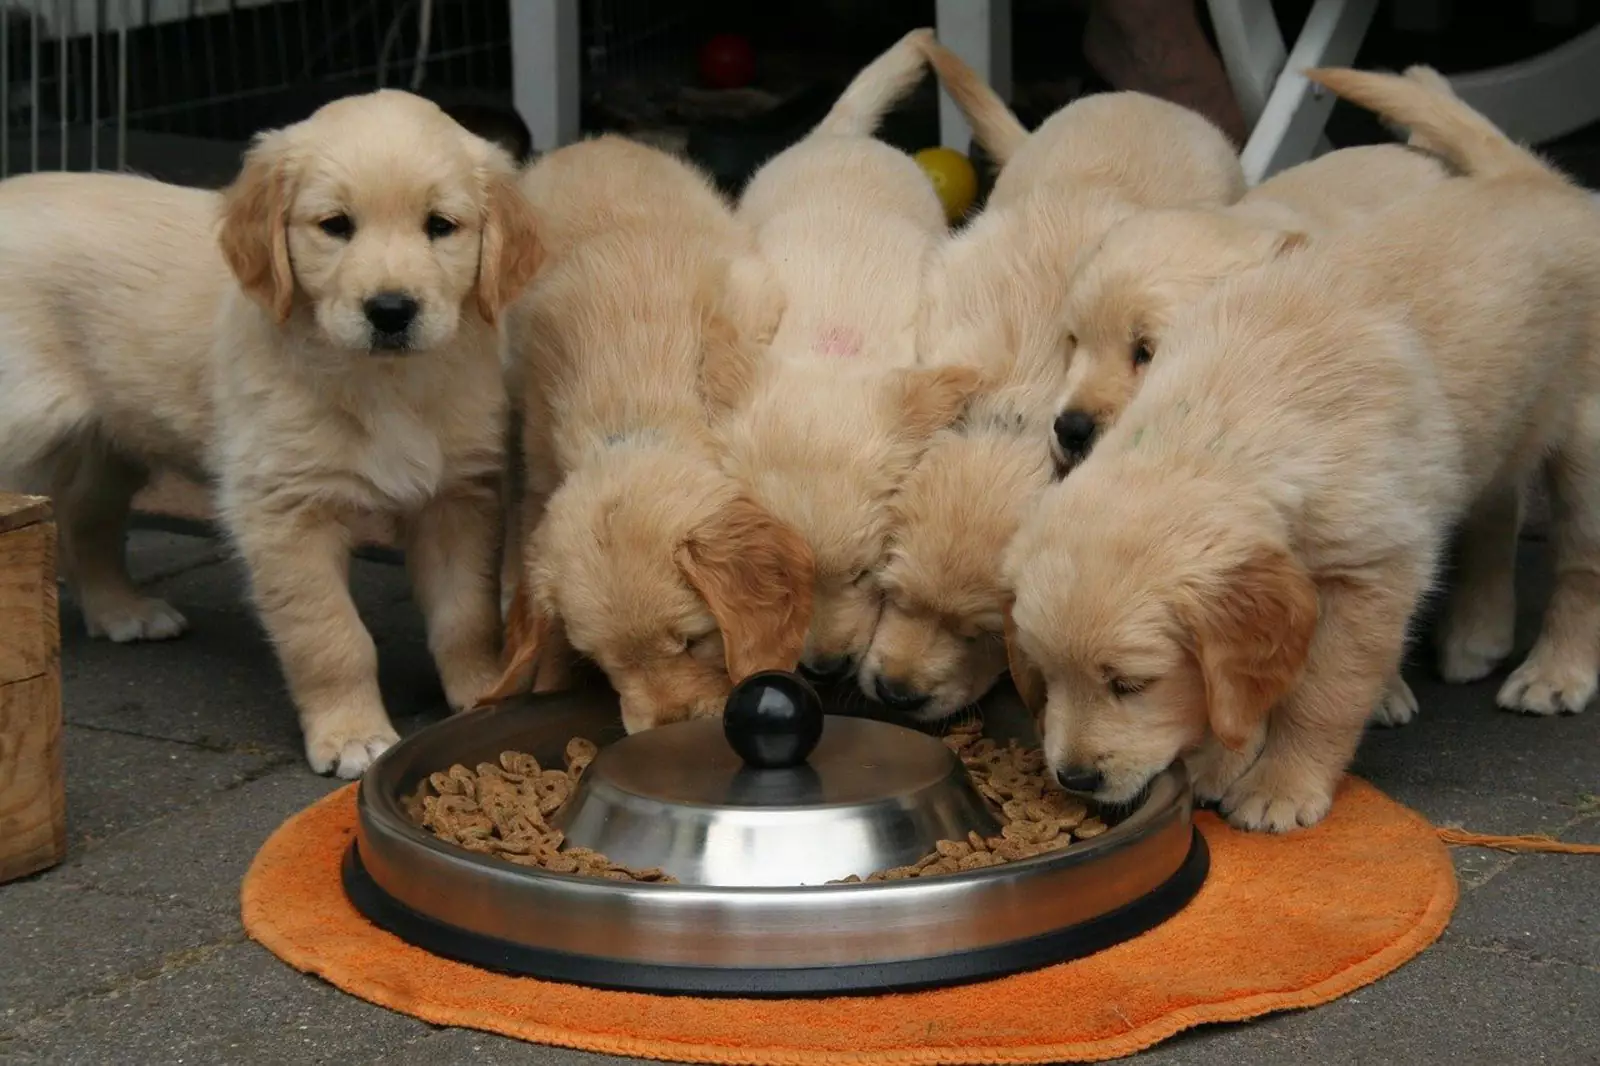 Feeding retriever puppies.